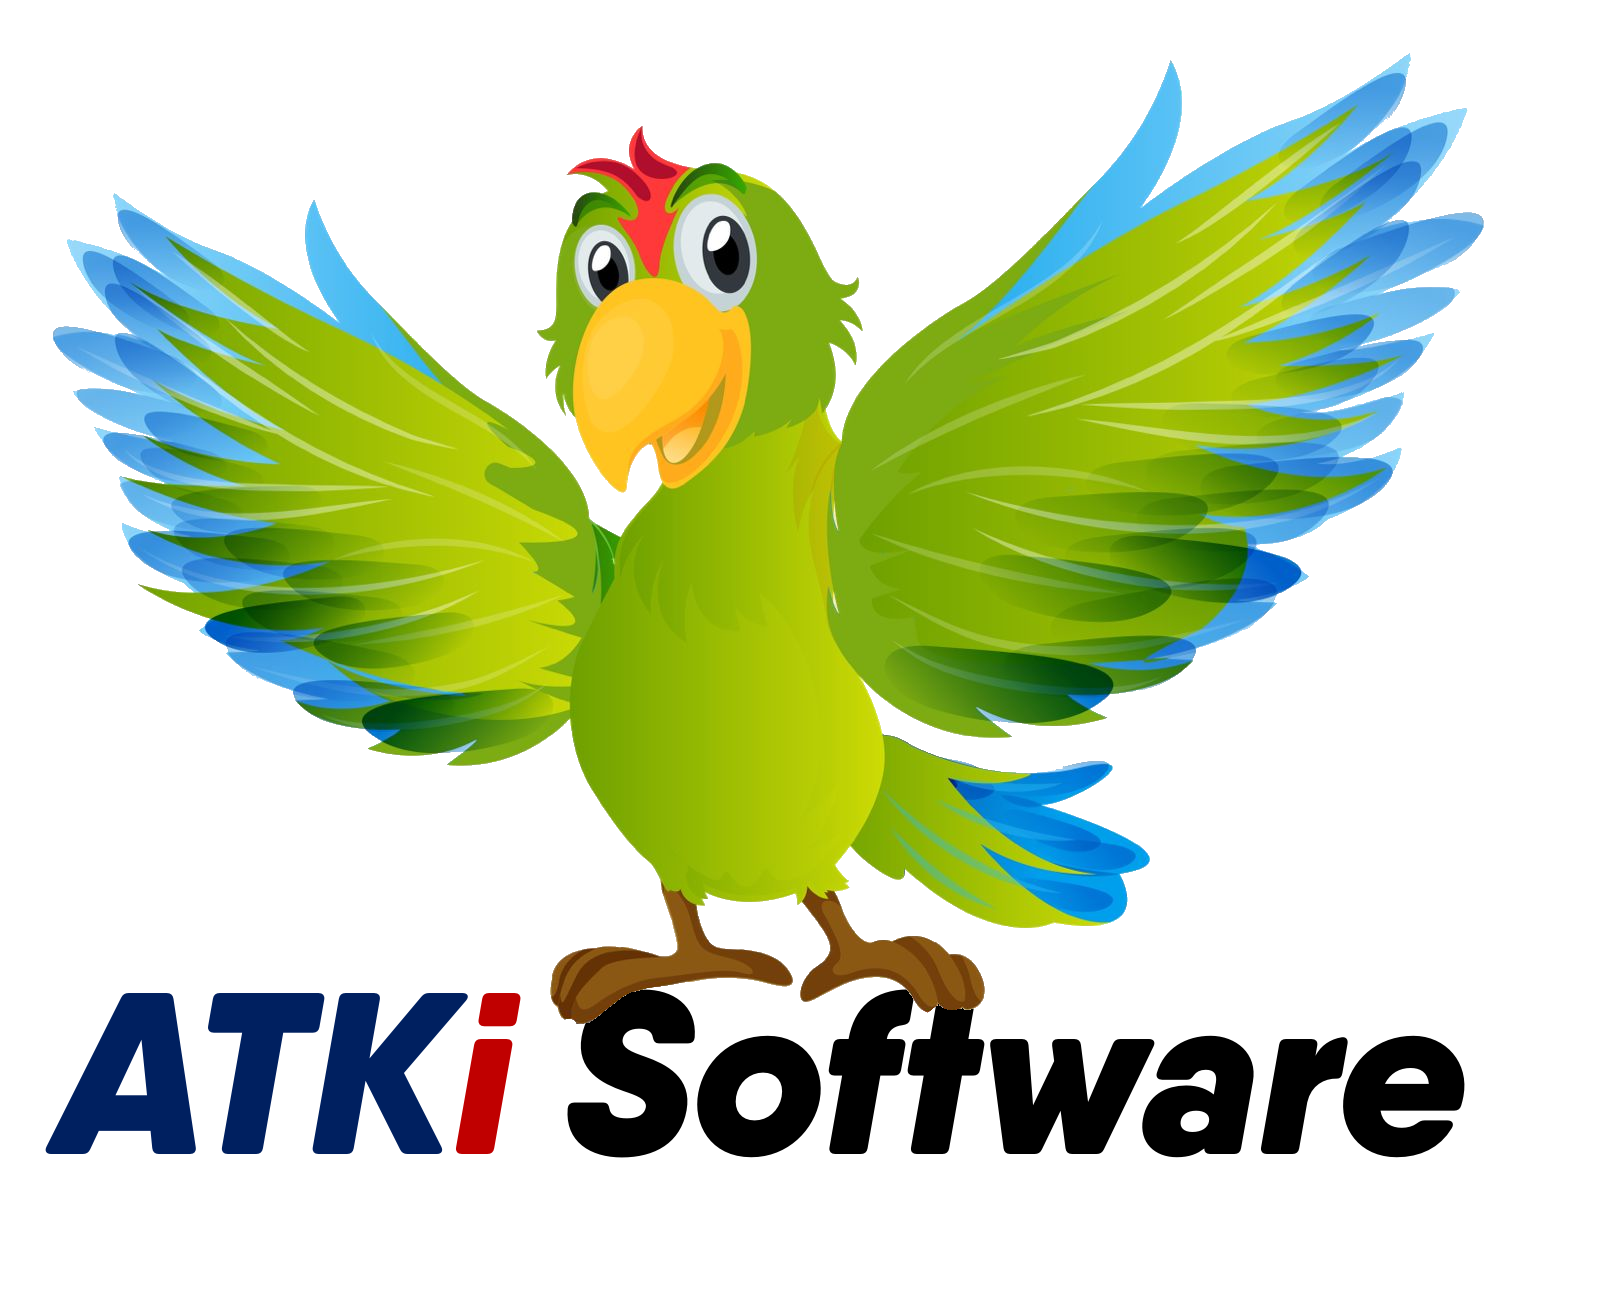 ATKi Software, Honduras